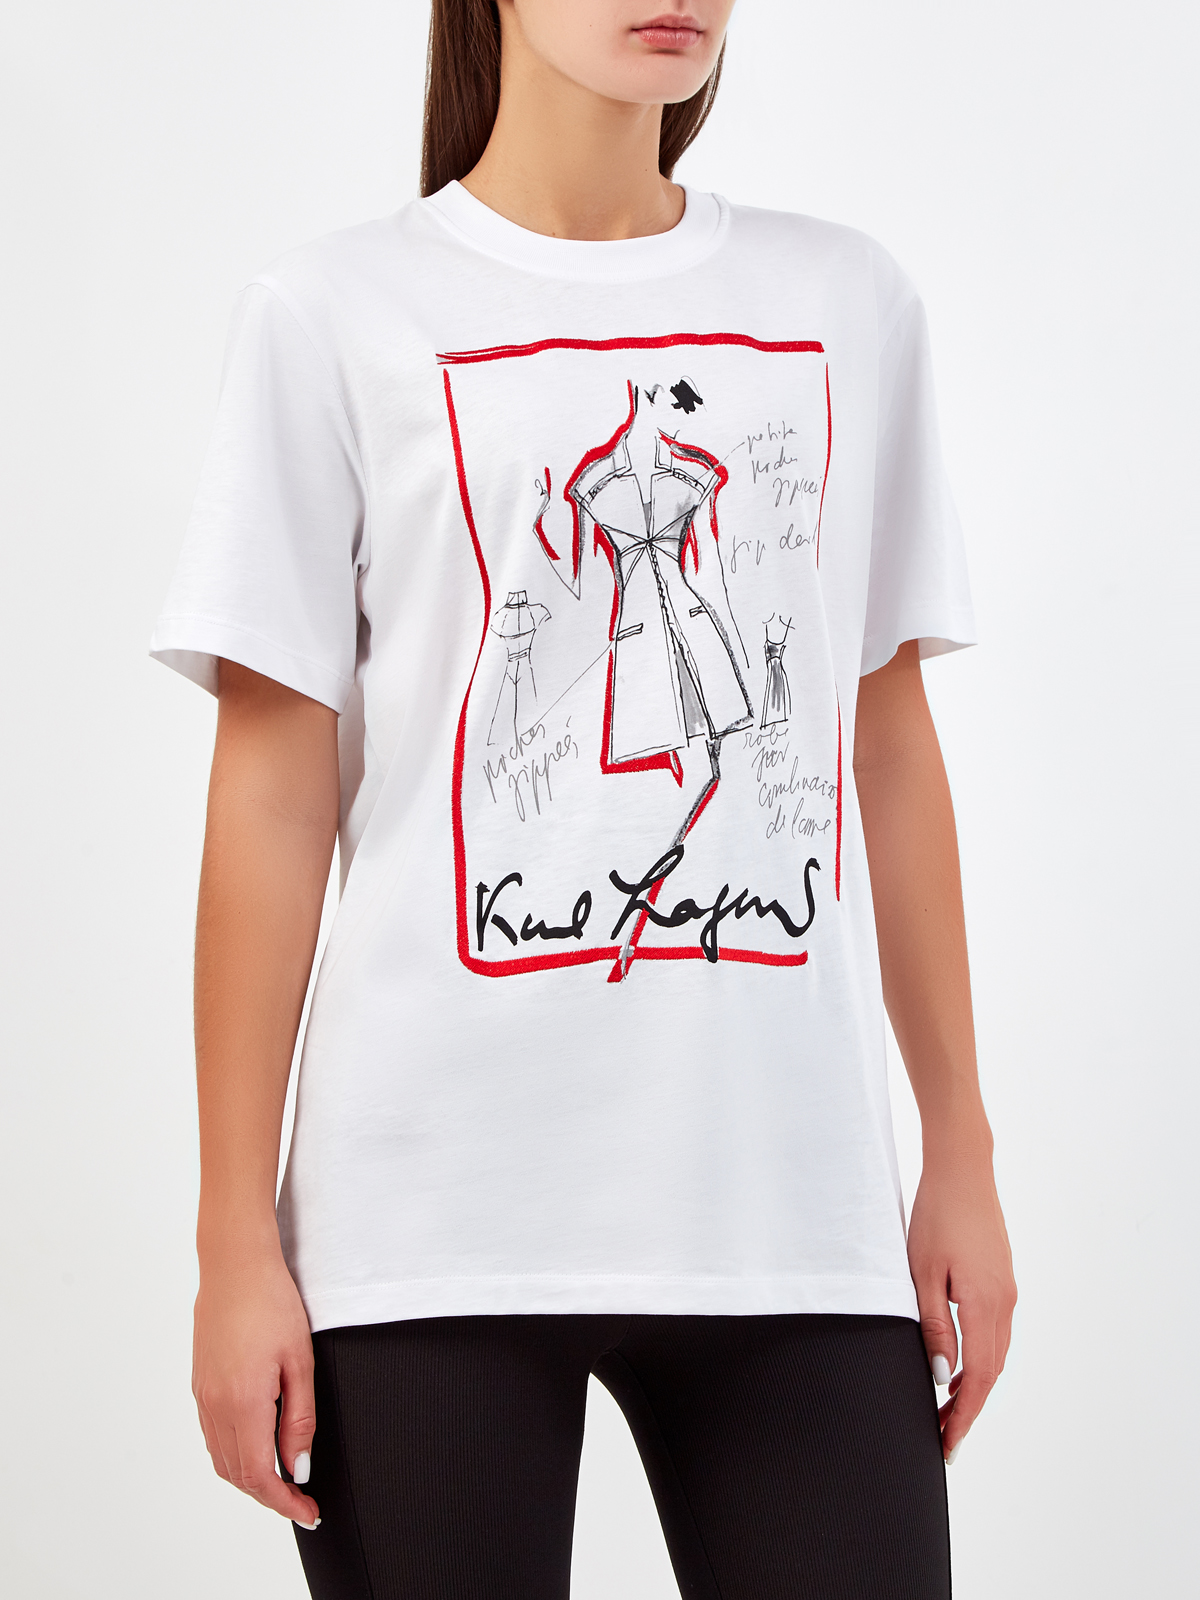 Свободная футболка Ultimate Icon из джерси с архивным принтом KARL LAGERFELD, цвет белый, размер S;M;L;XL - фото 3